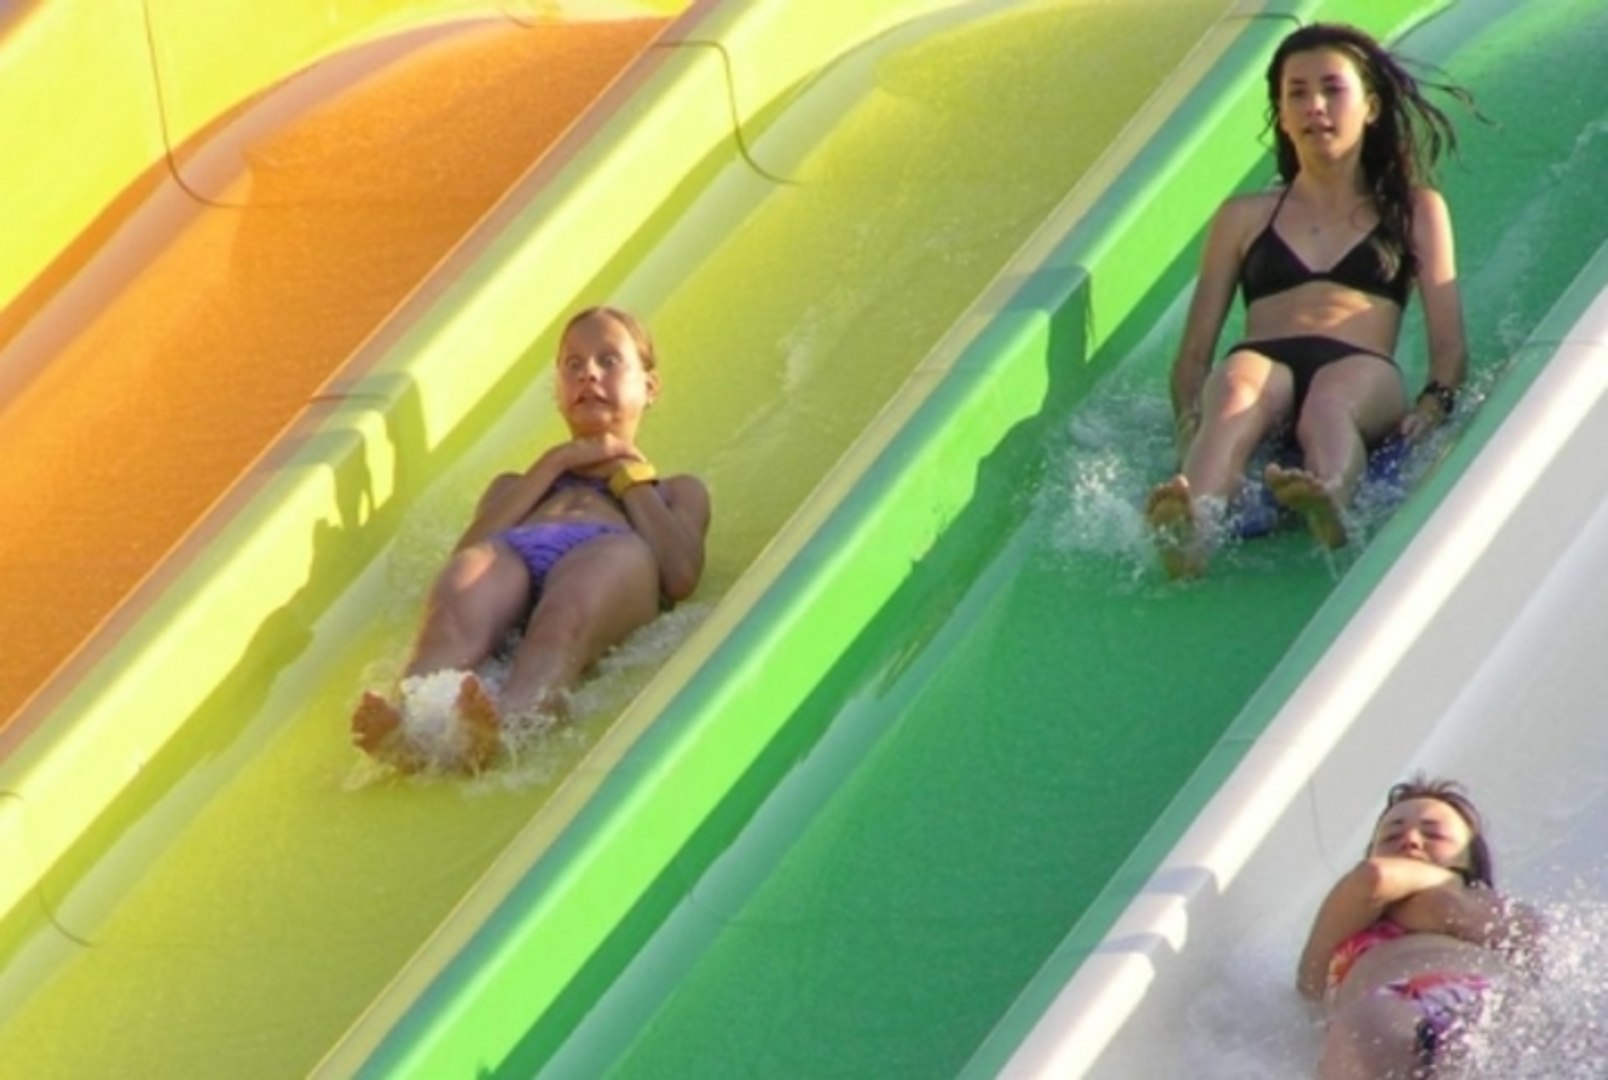 chris janiak share water slide bathing suit mishaps photos